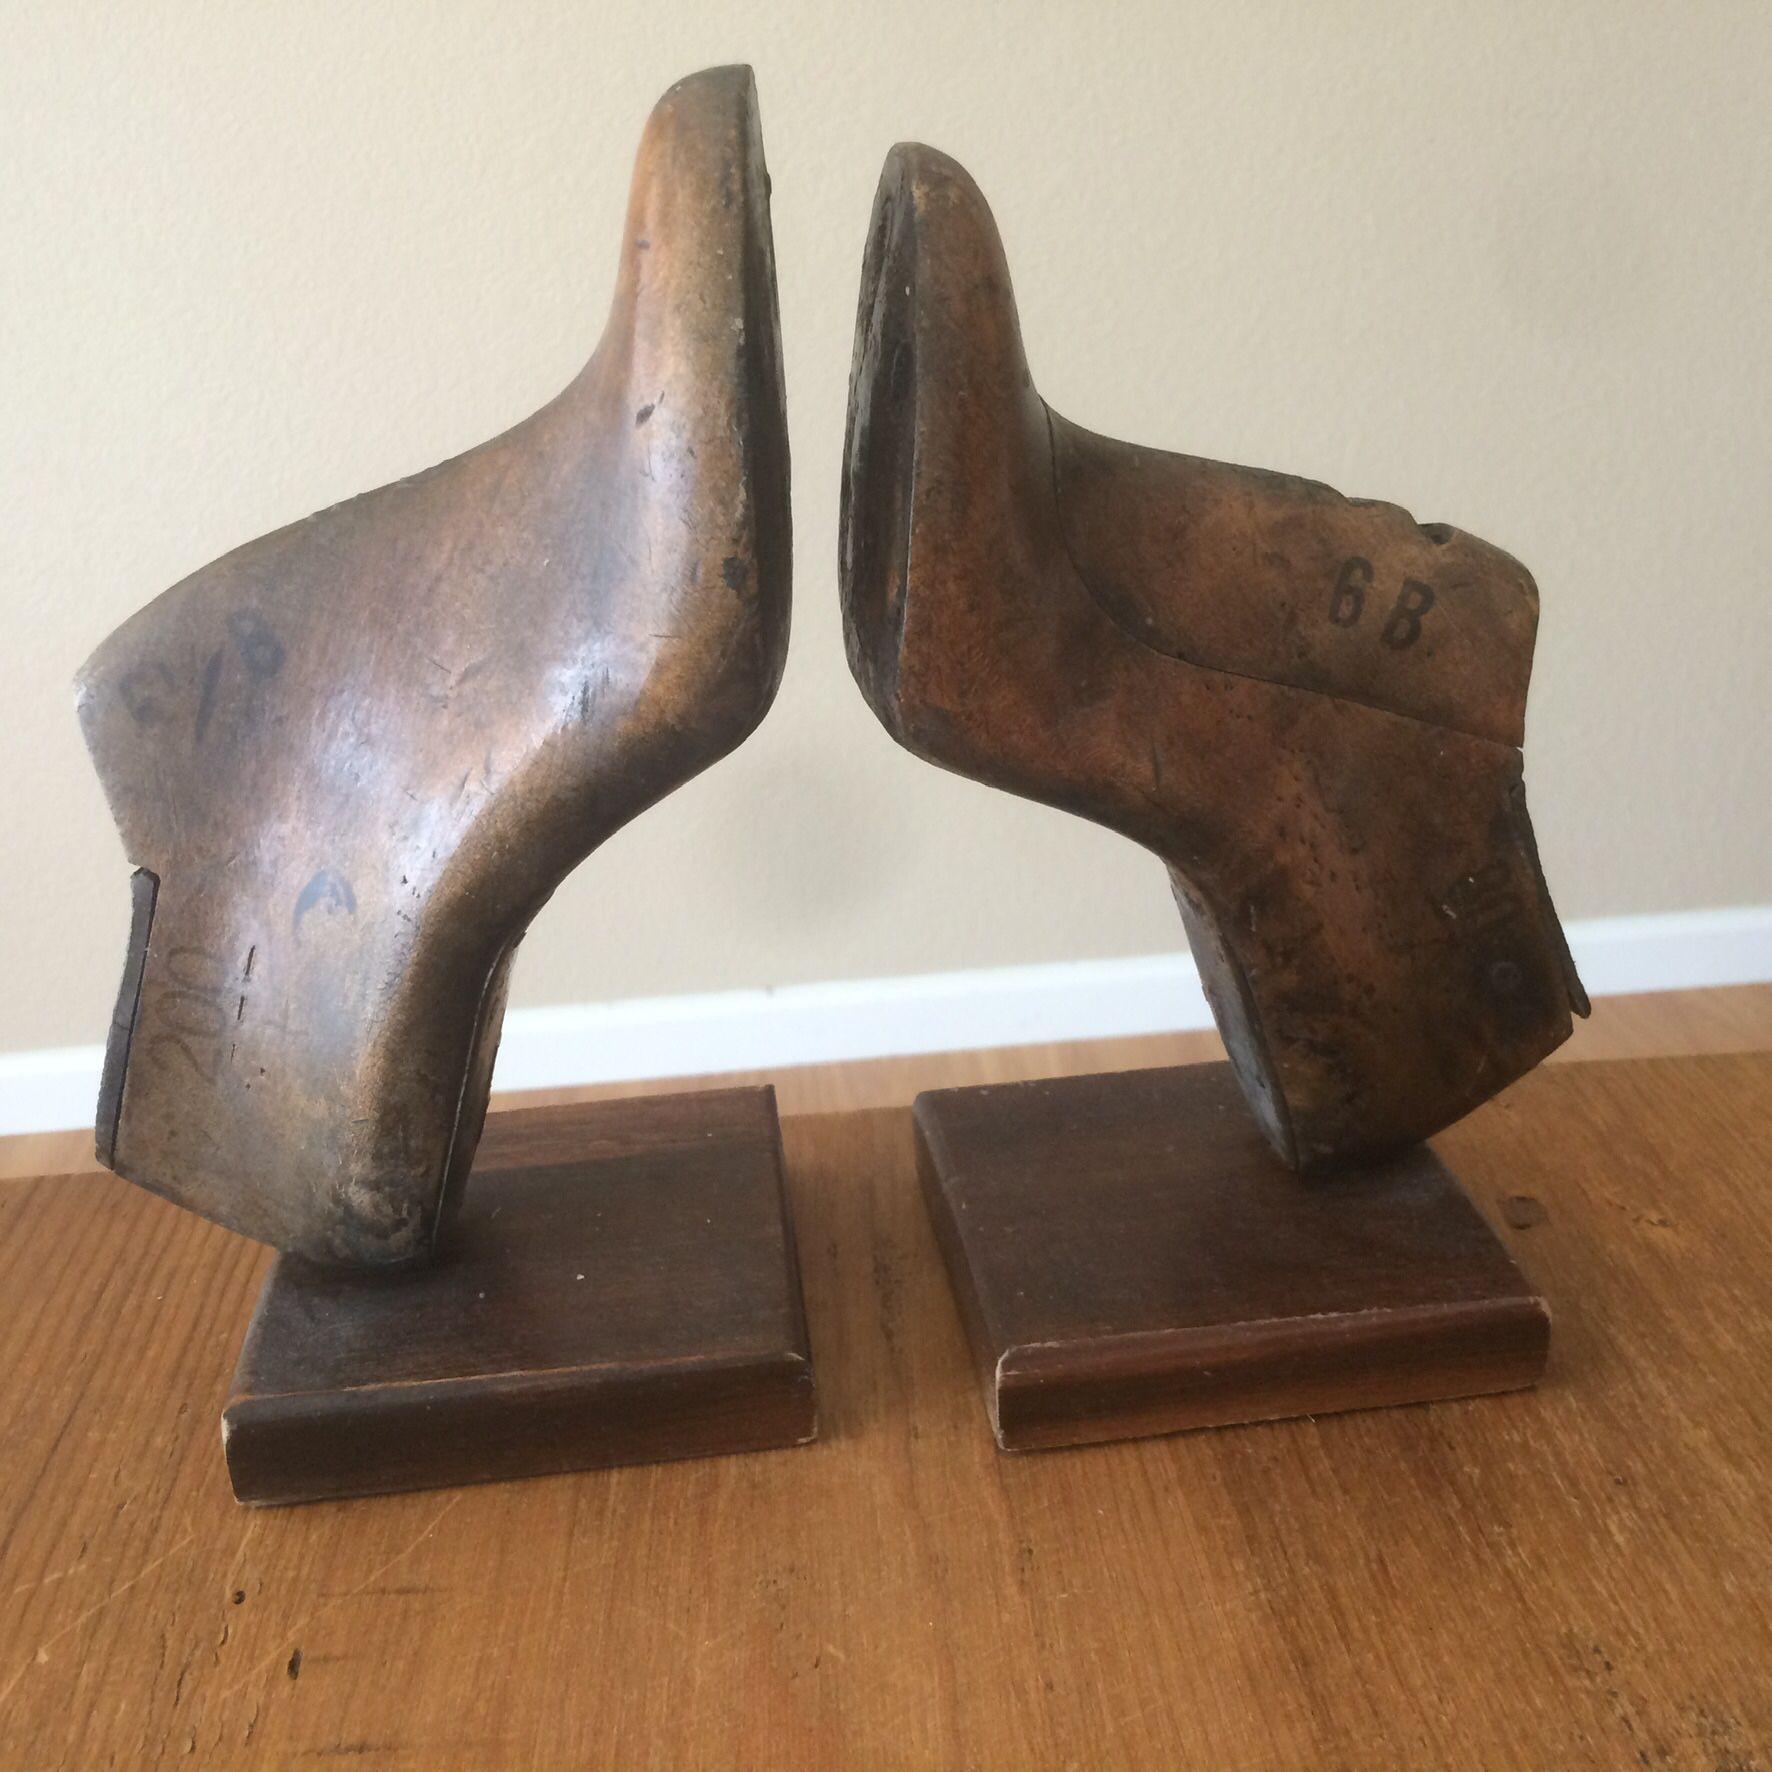 Vintage wooden shoe lasts/forms